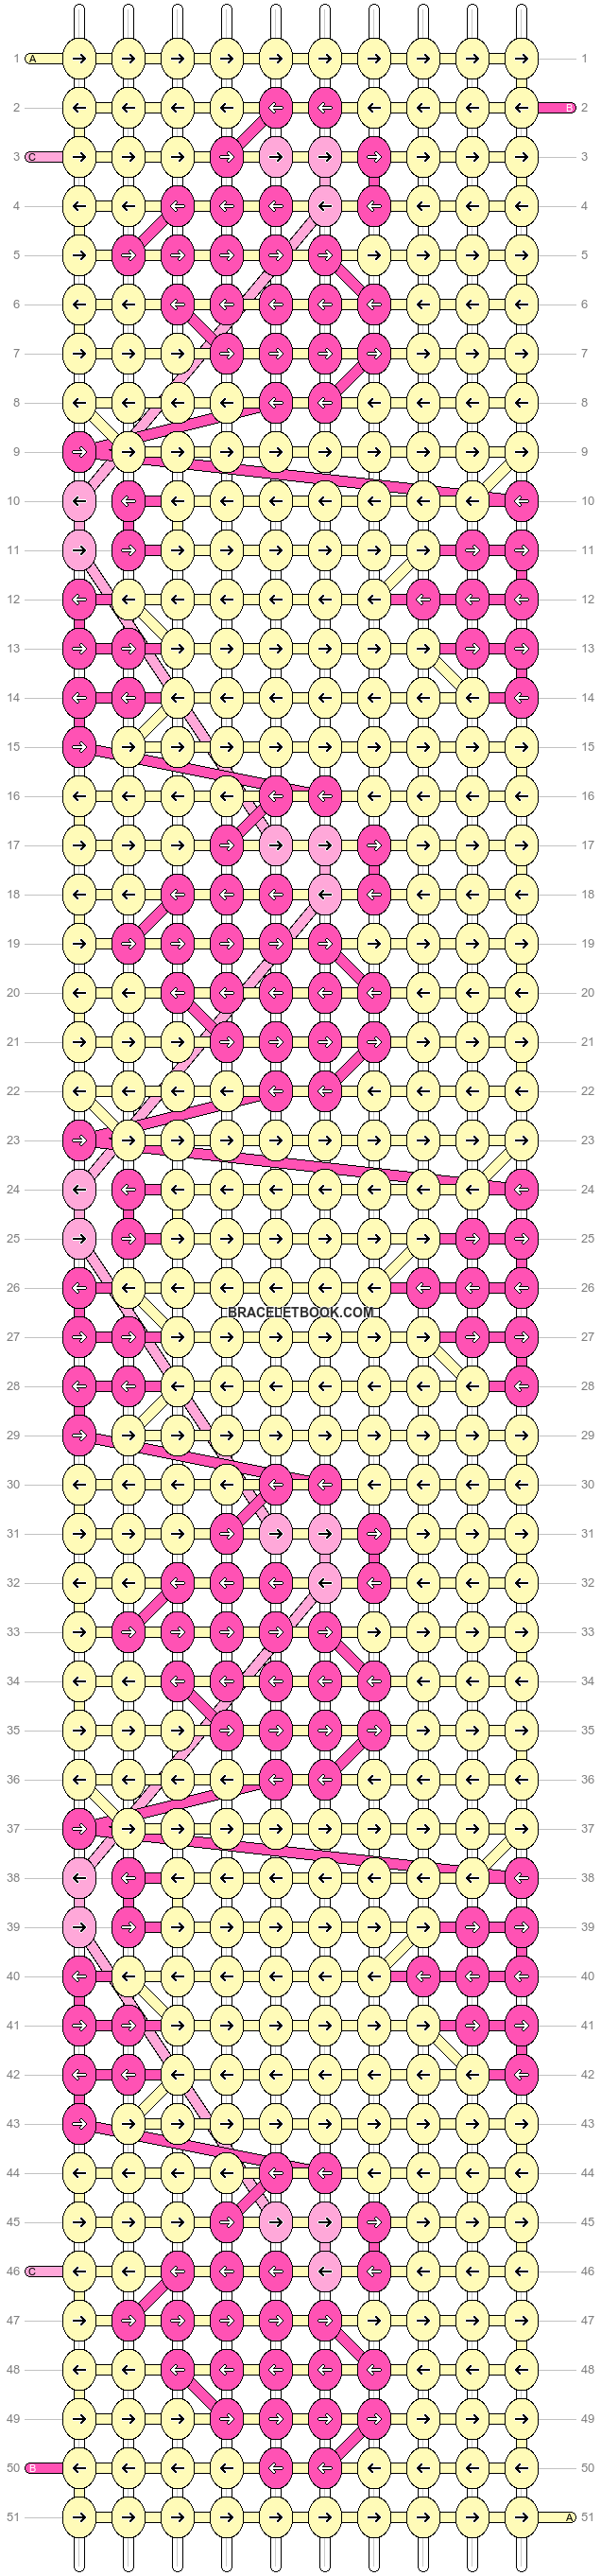 Alpha pattern #80530 variation #190089 pattern